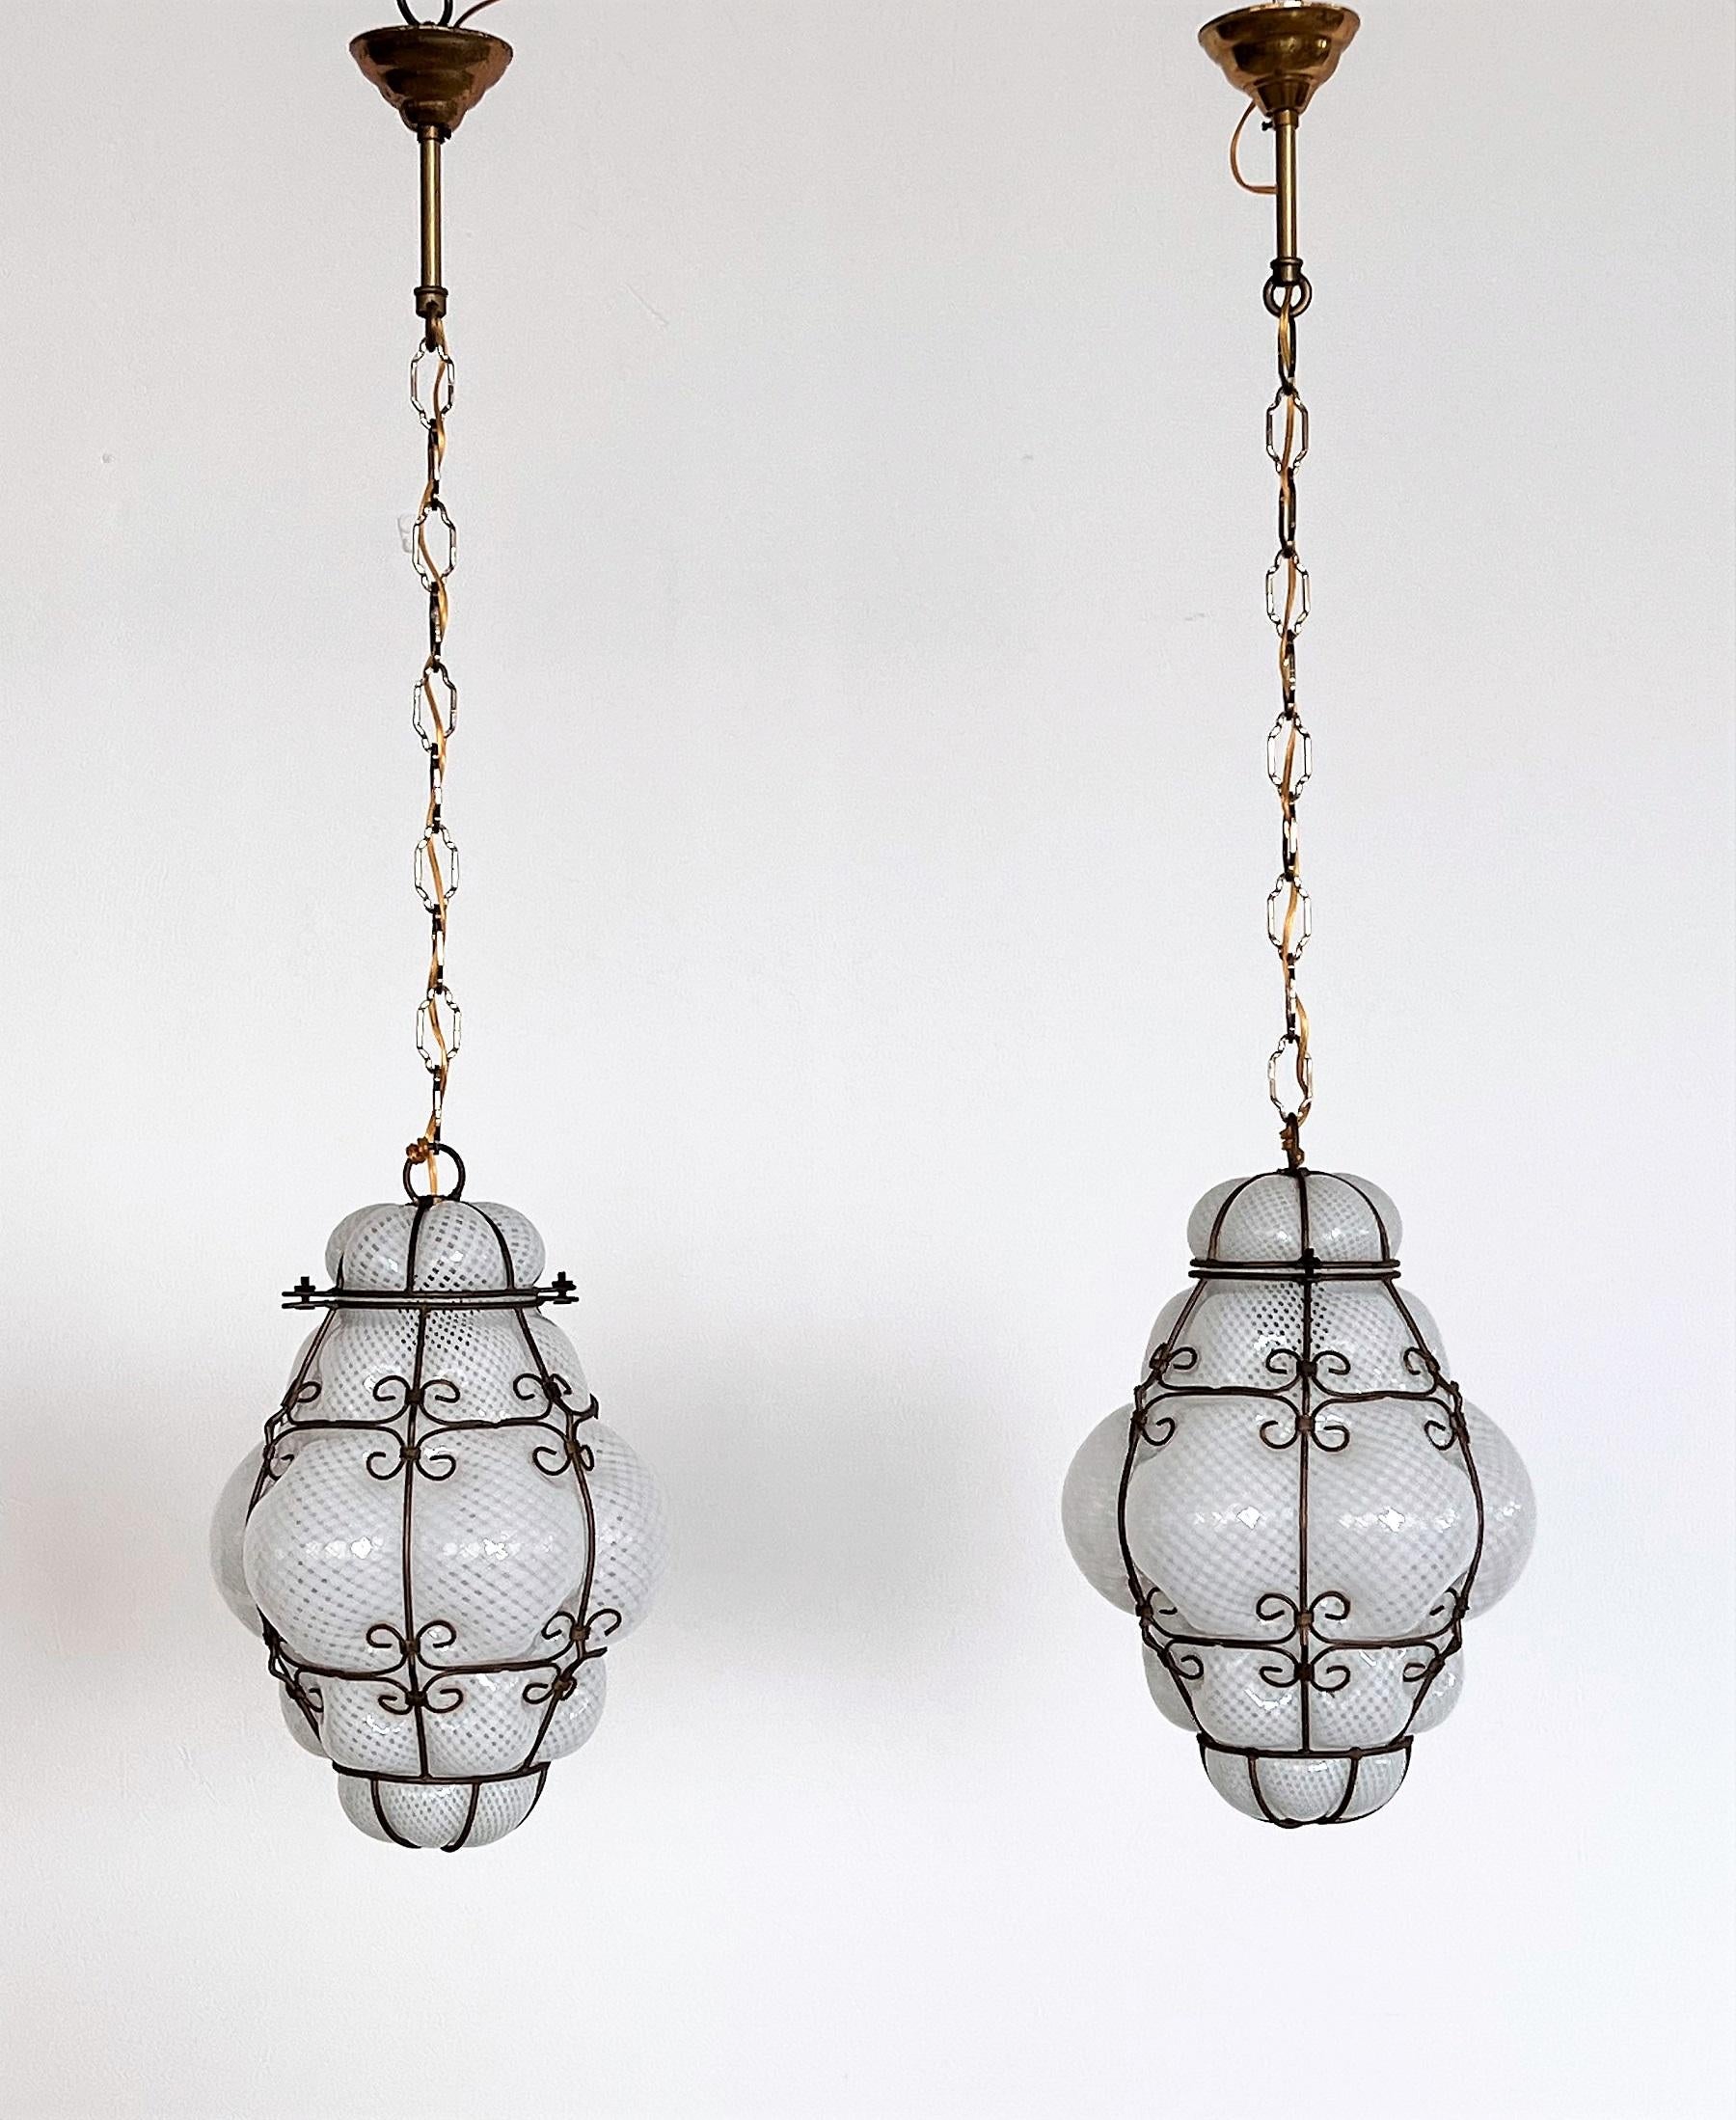 Wonderful pair of Venetian lanterns, which were handmade during the 1950s at Venini in Murano. 
The pure white 